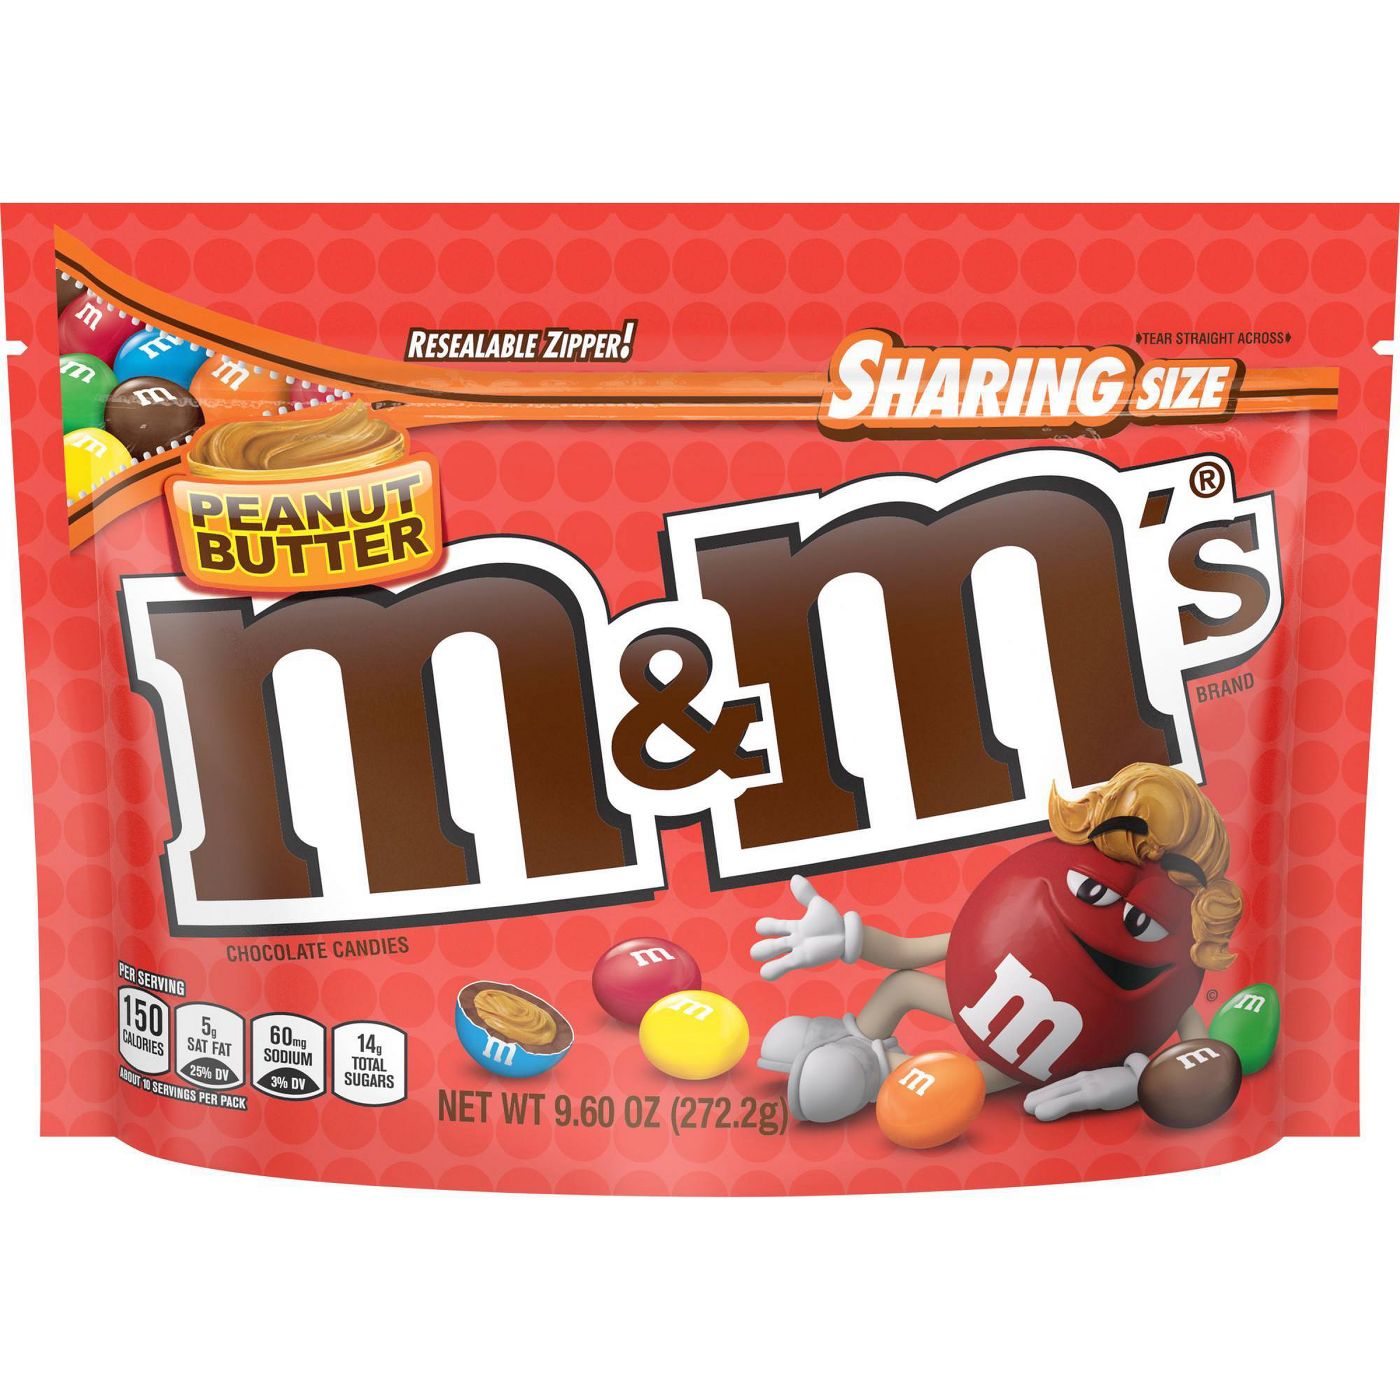 m&m white chocolate share size